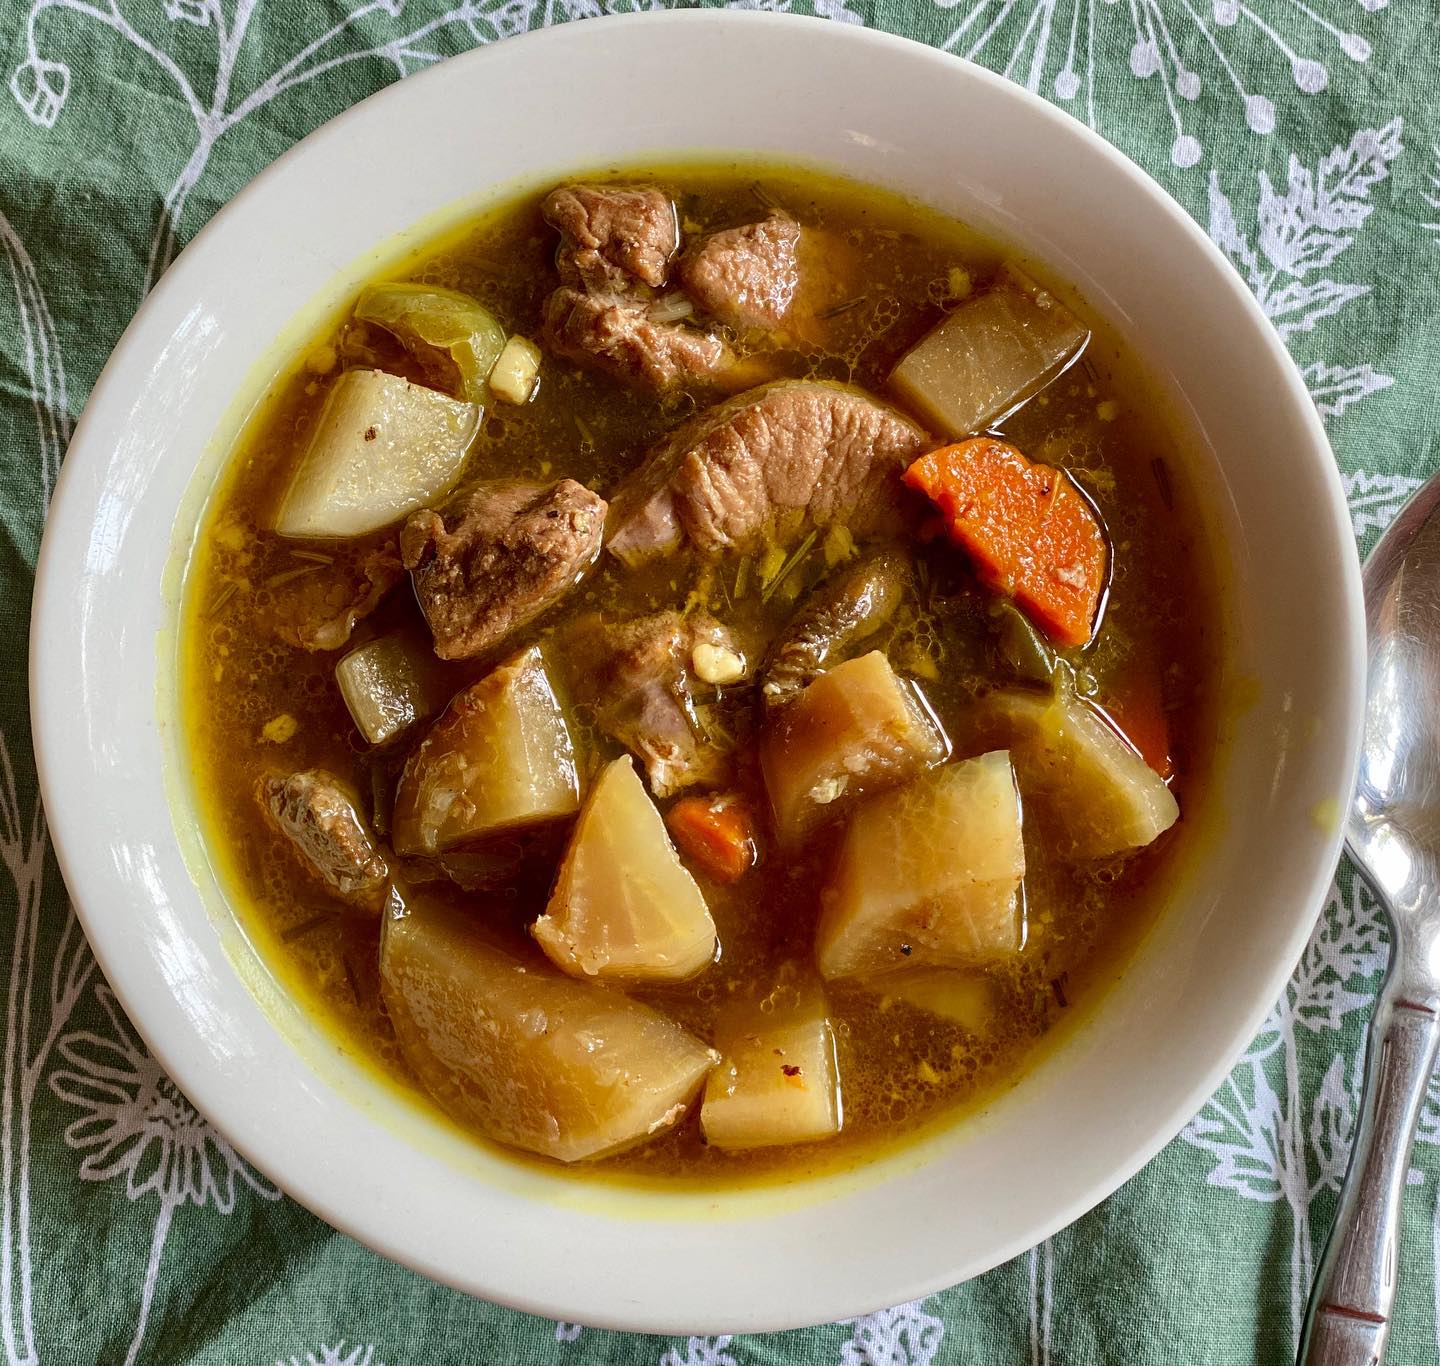 Lamb Stew With Daikon or Radish